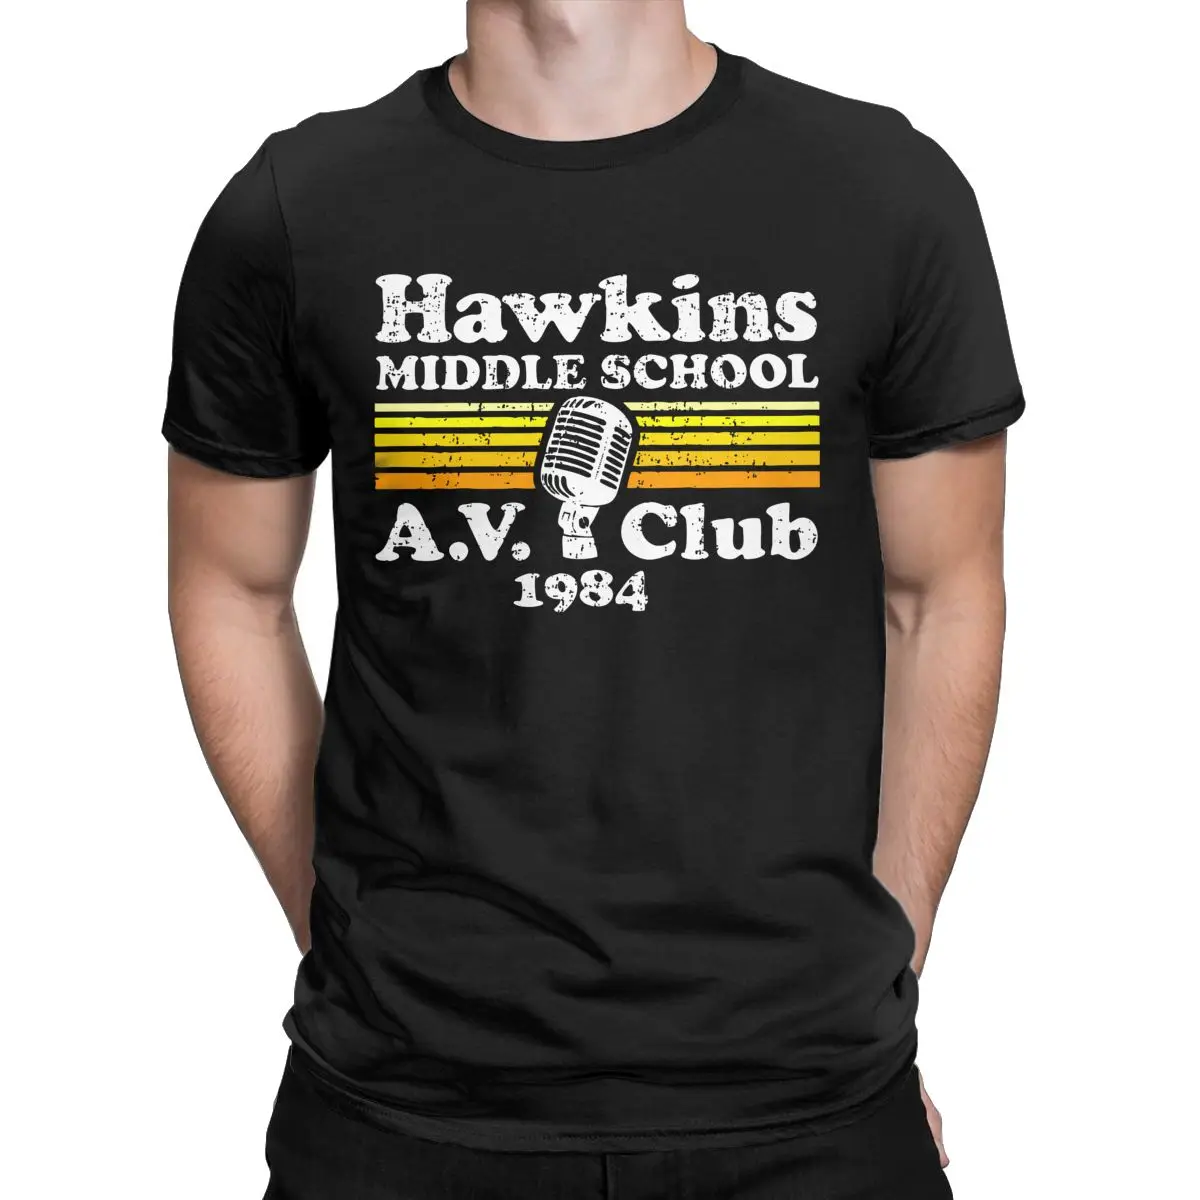 

Hawkins Middle School A.V Men's shirt Stranger Things Vintage Tee Shirt Short Sleeve Crewneck T-Shirt Cotton Summer Clothing